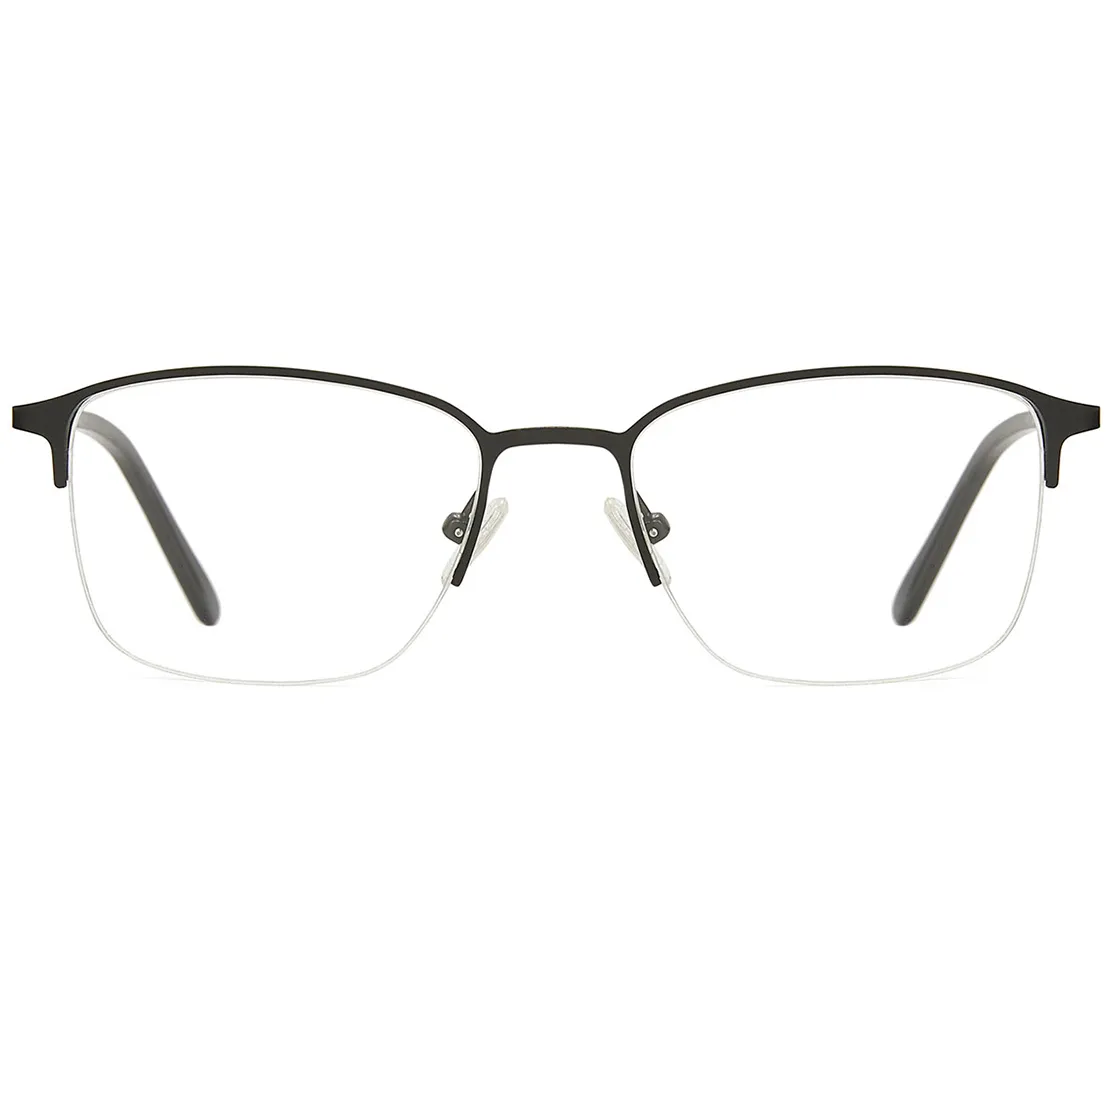 Business Rectangle Black-Silver  Reading Glasses for Men